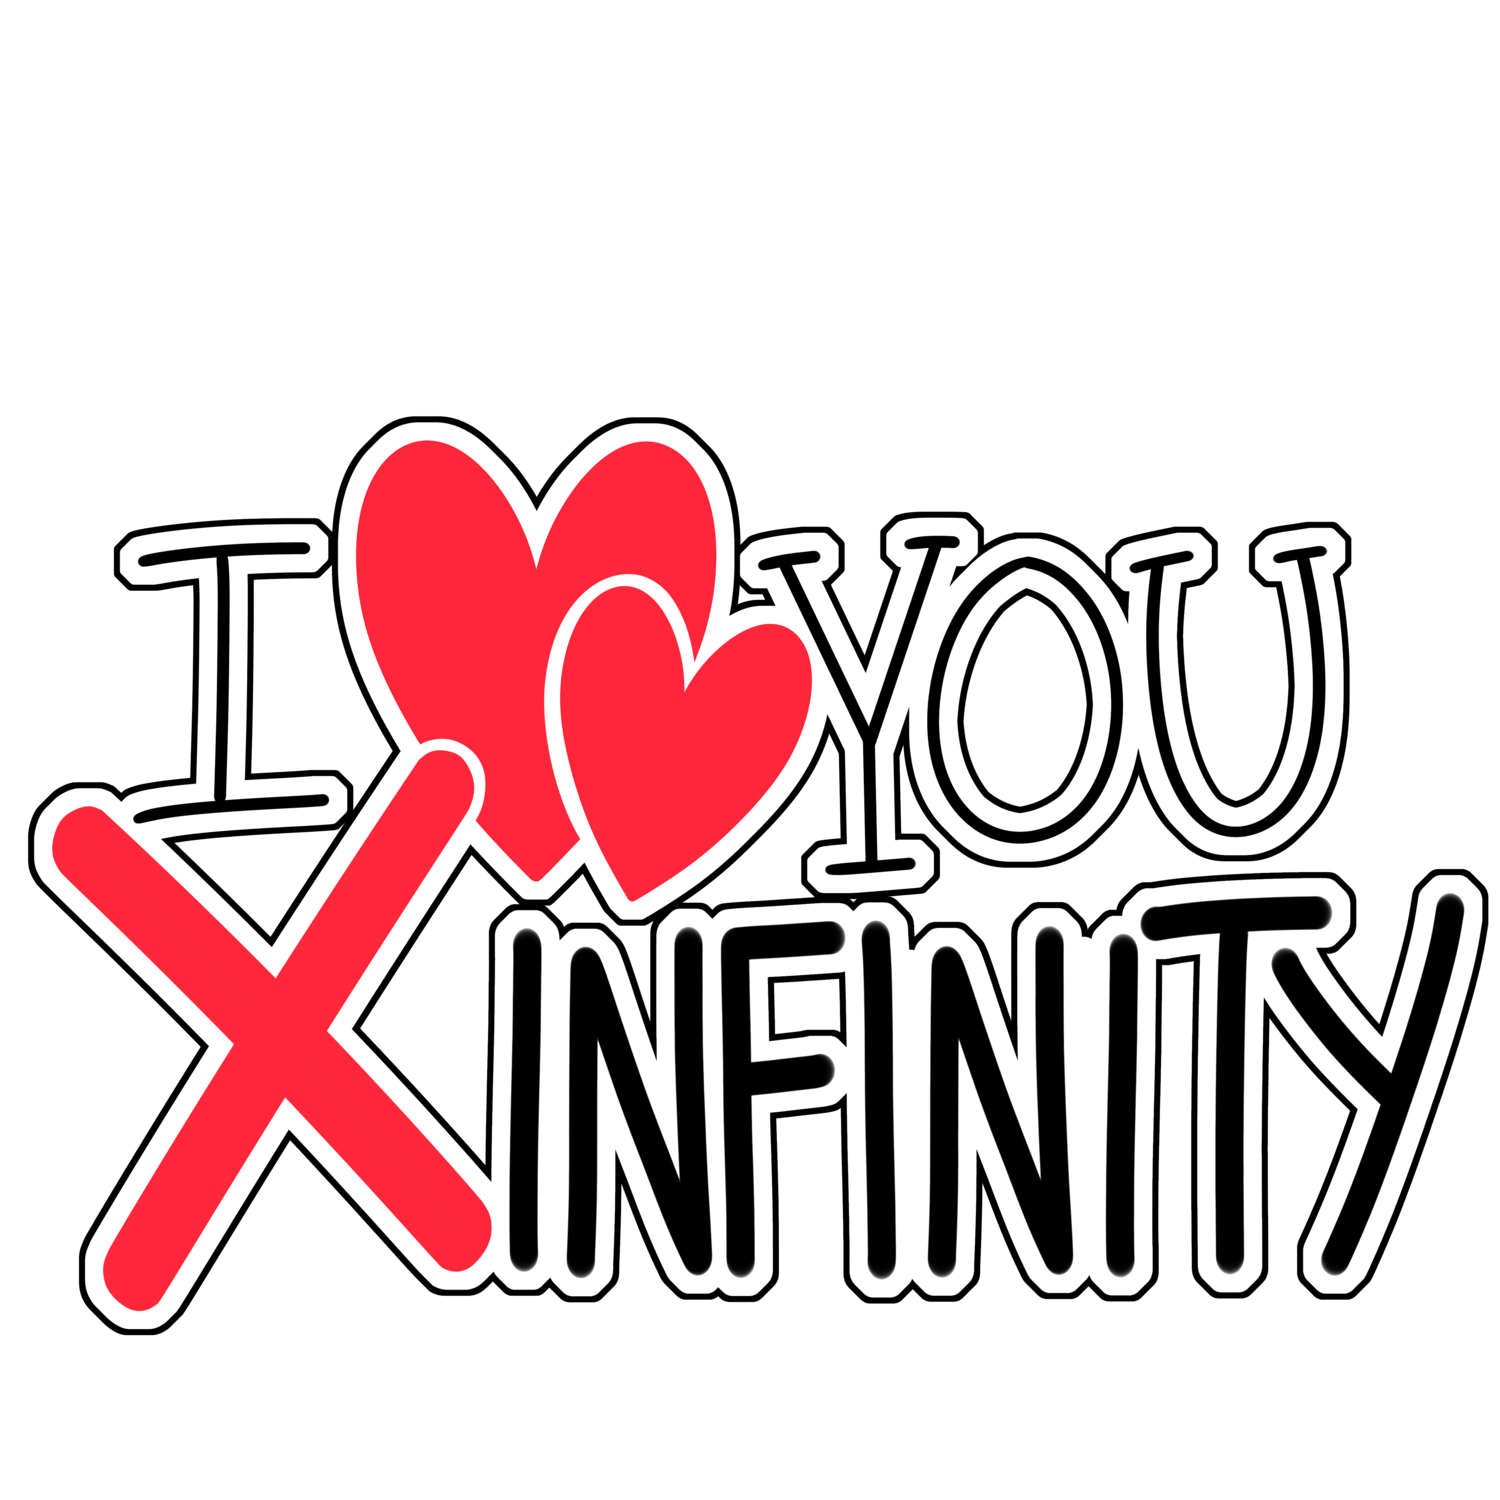 I Love You X Infinity